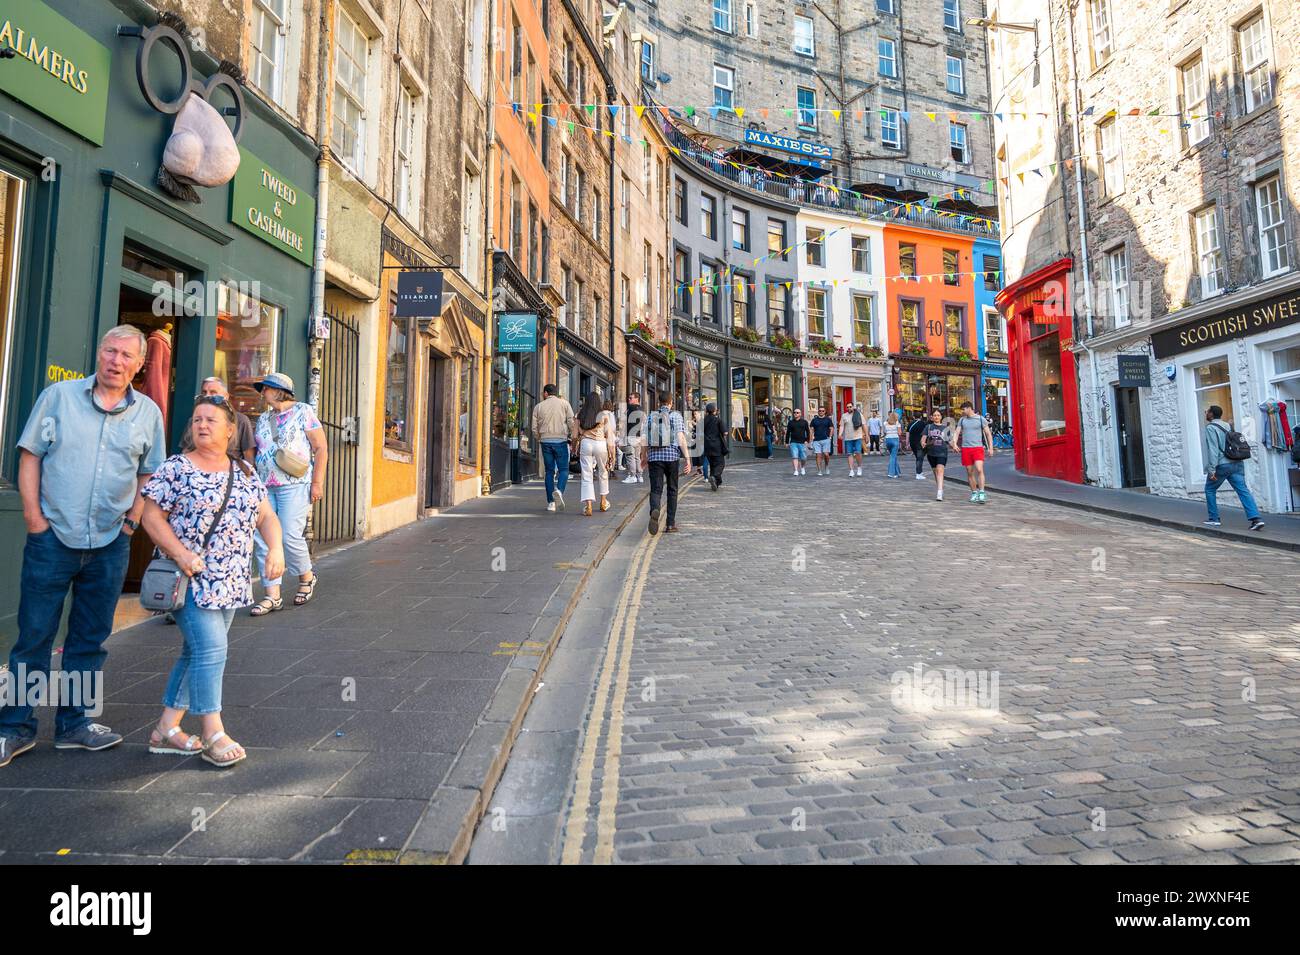 Coffe shops and stores in Edinburgh Scotland Stock Photo